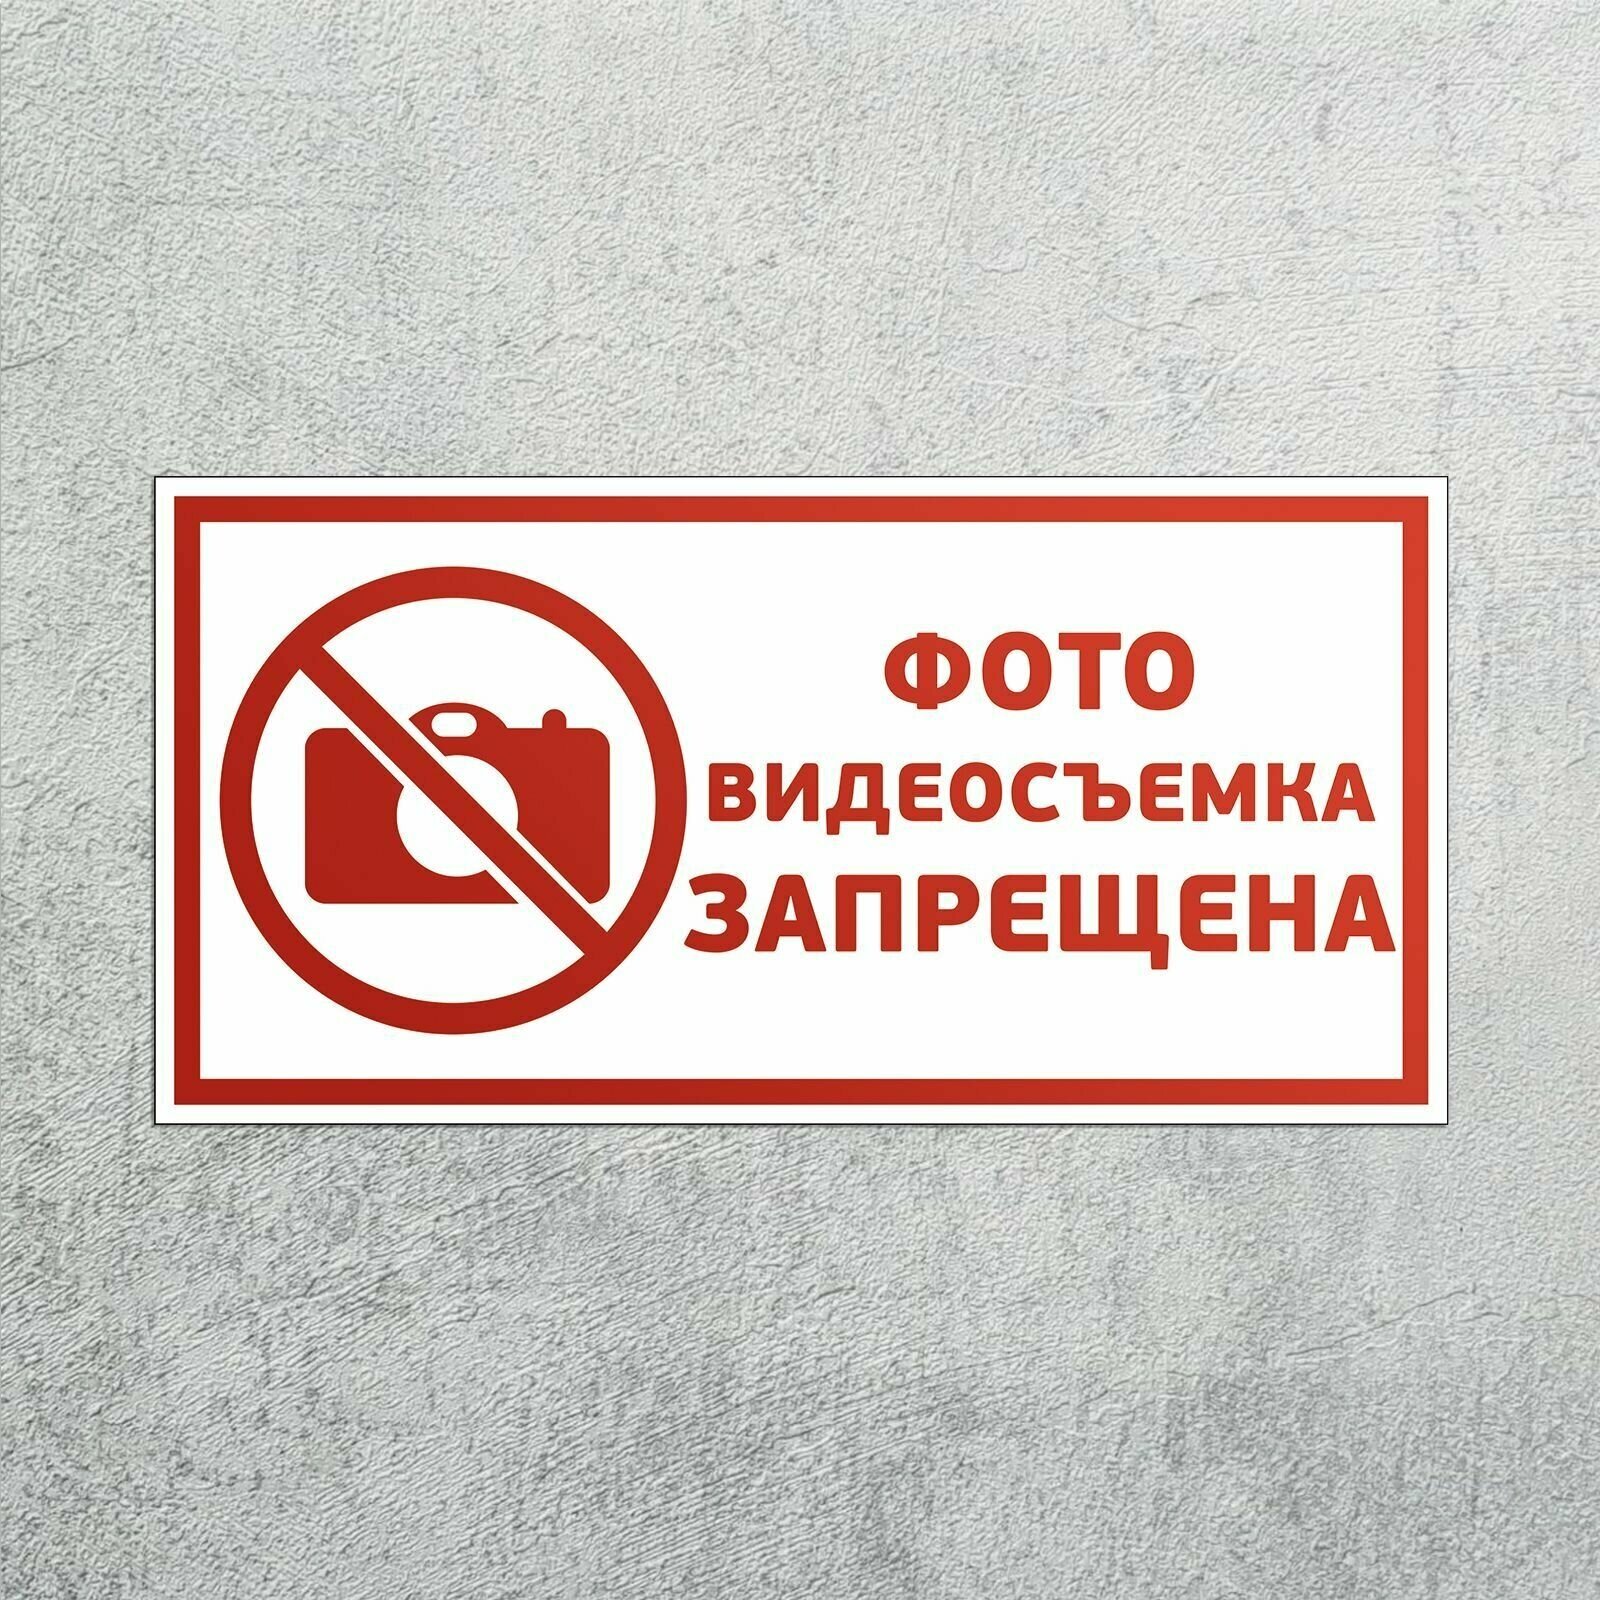 Наклейка Фото- Видеосъёмка запрещена 3 шт, знак Не снимать, самоклеящаяся плёнка, 200х100 мм